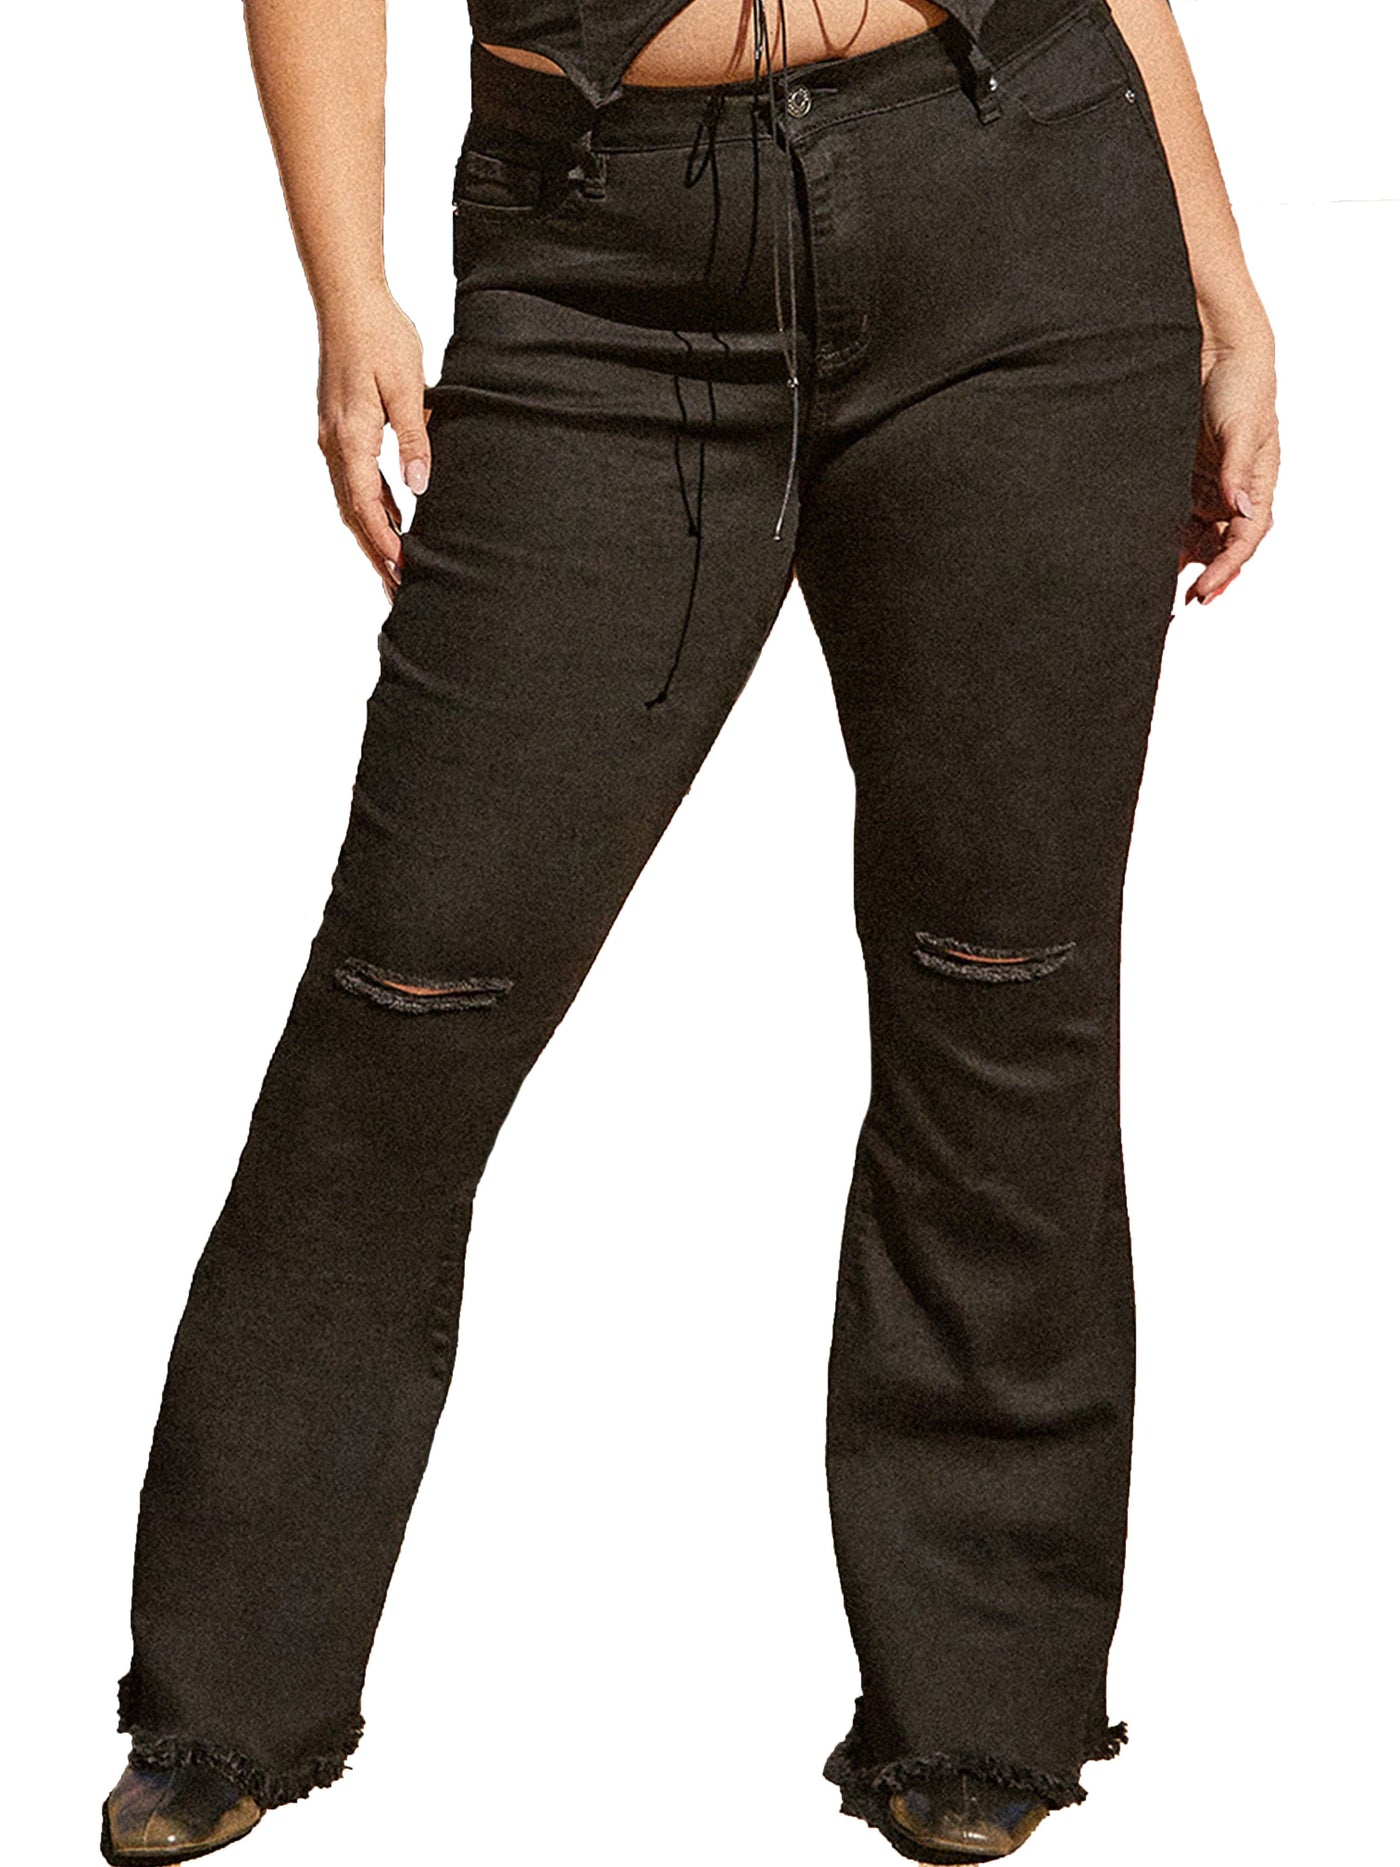 Plus Size Women's  Distressed Super Flare Jeans